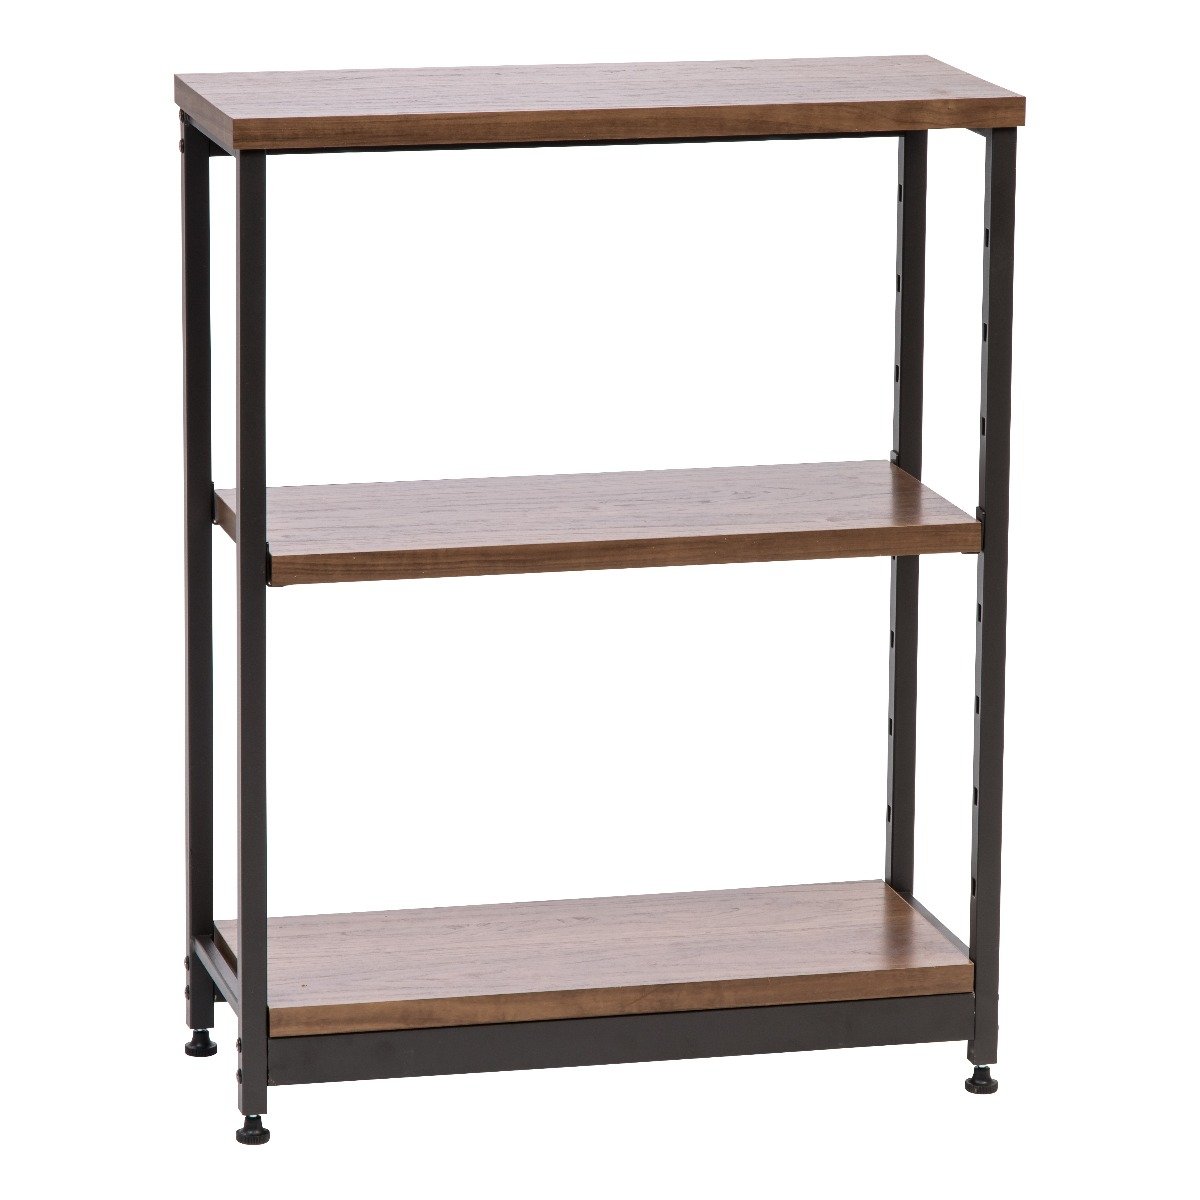 Wood and Metal Shelf - 3 Tier - Narrow